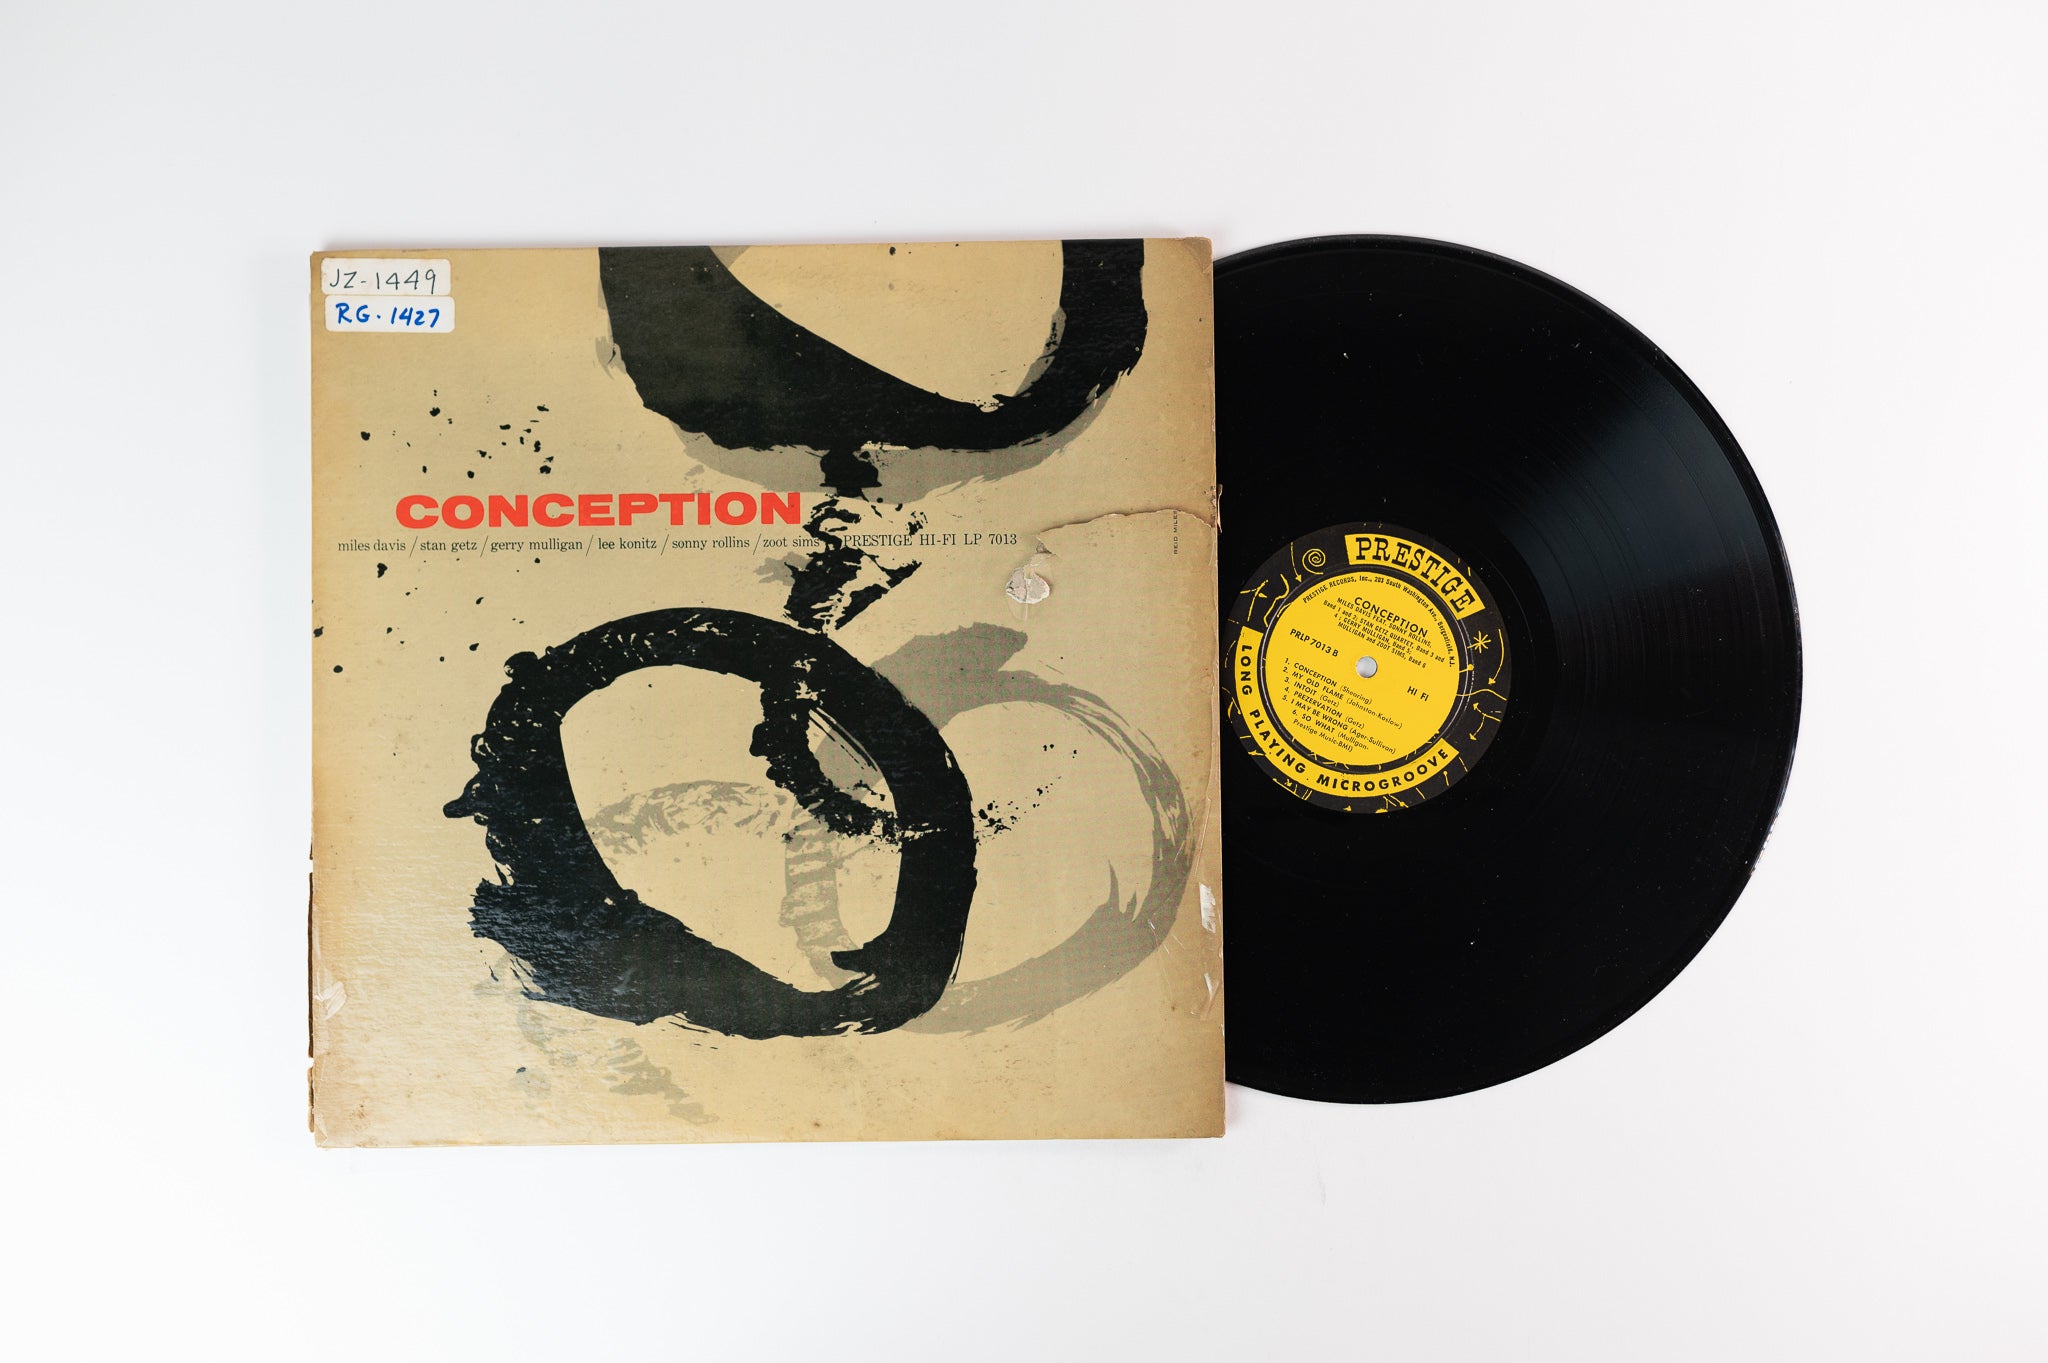 Miles Davis & Various Artists - Conception on Prestige Mono Deep Groove Bergenfield